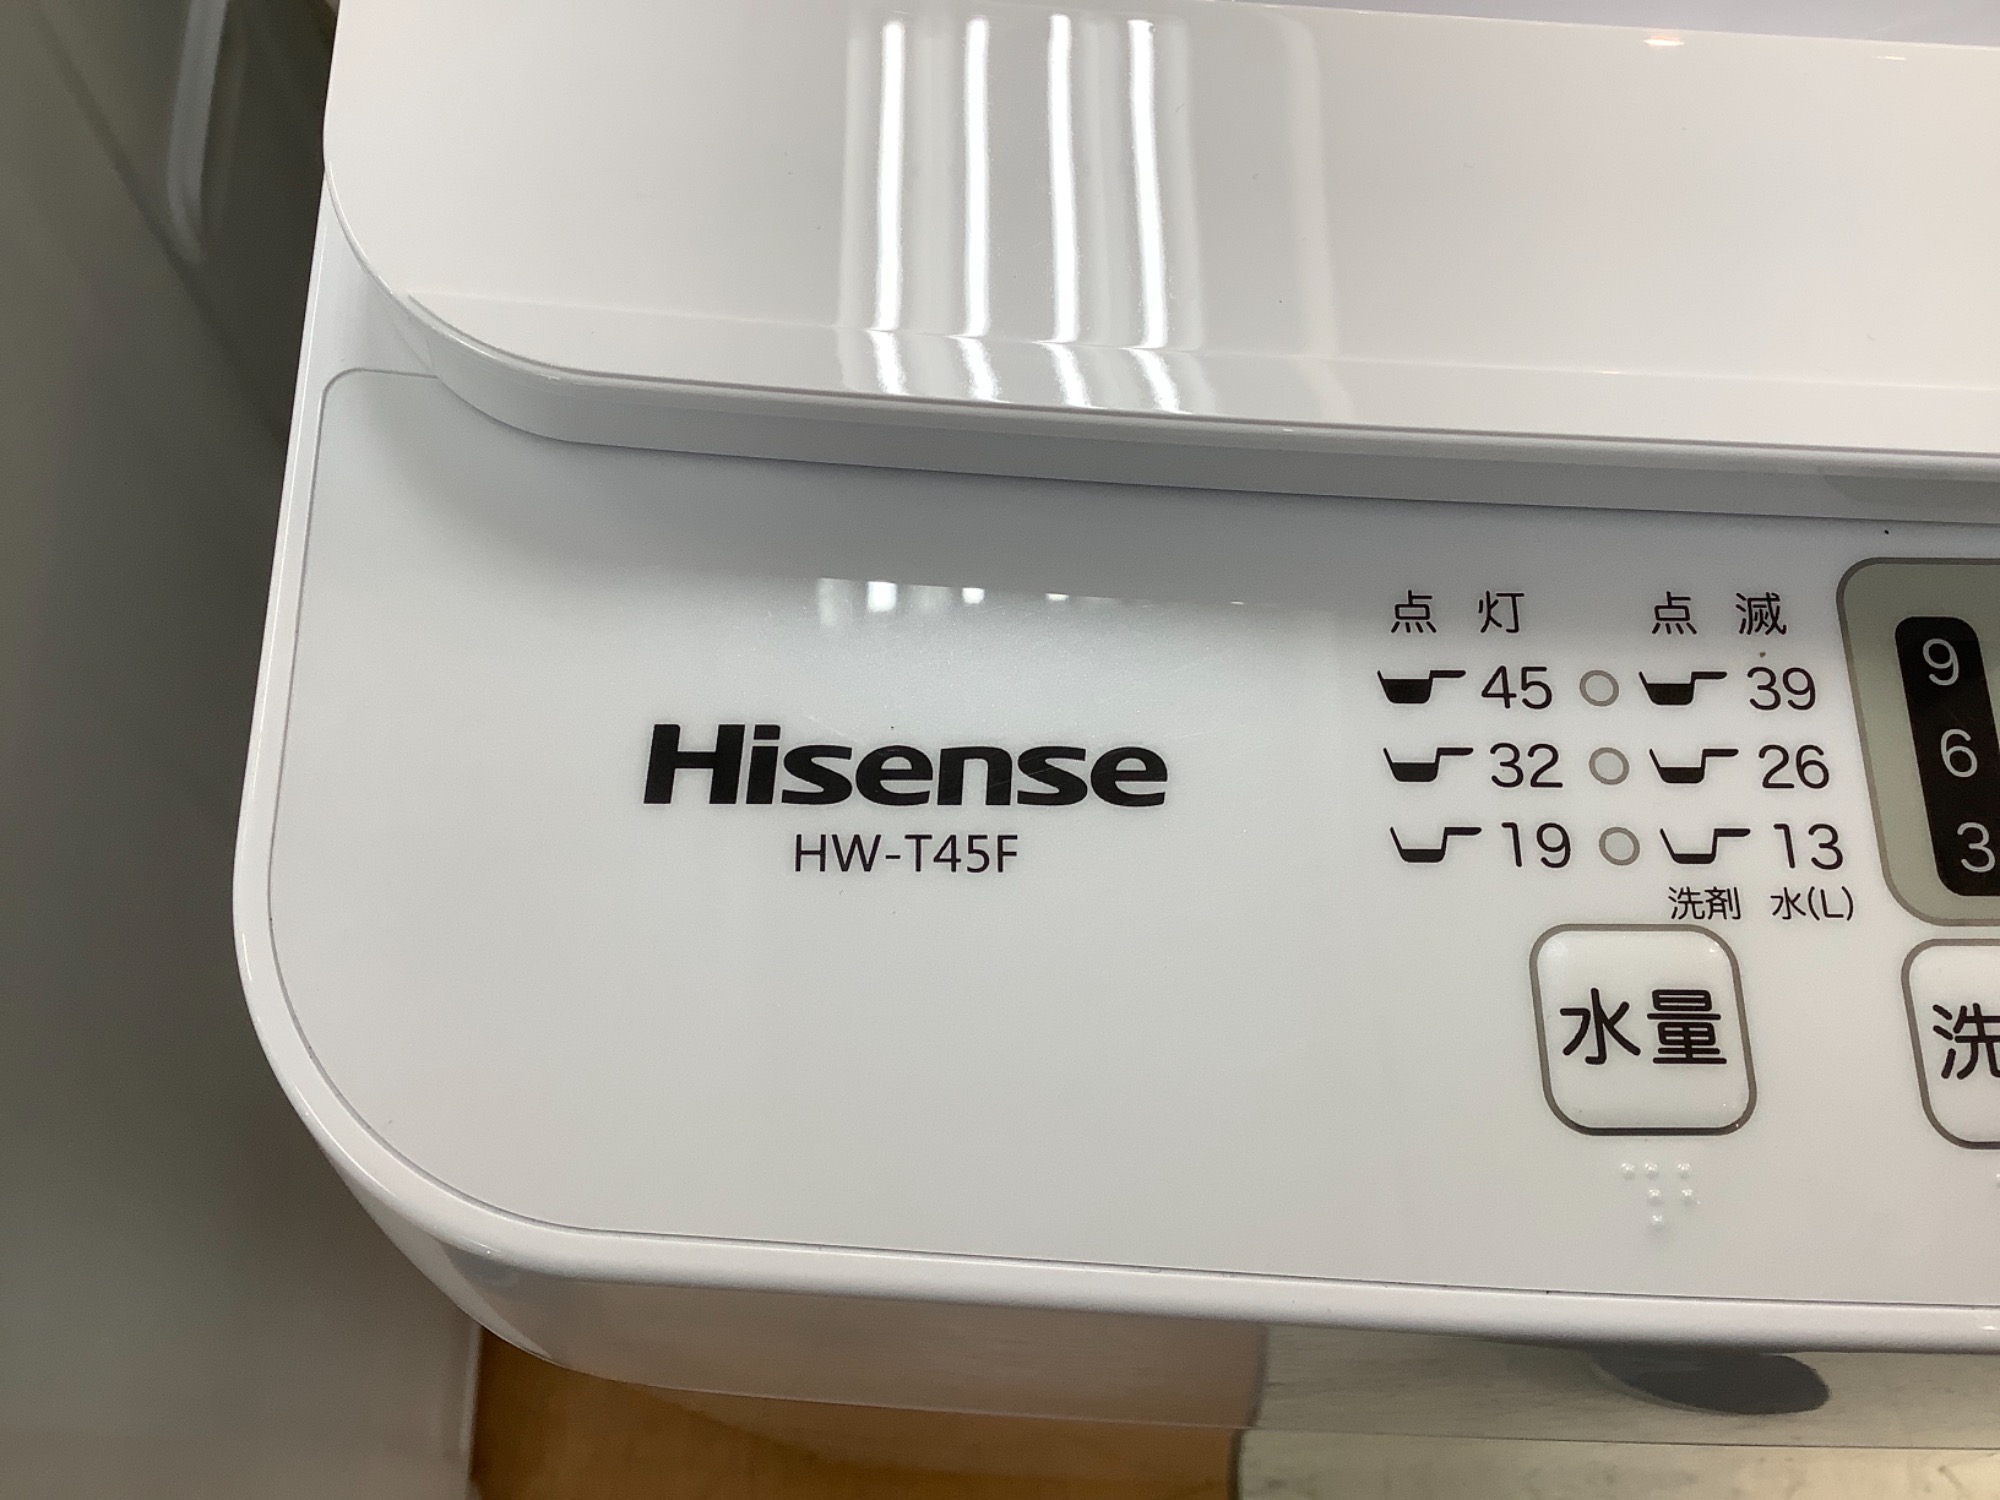 Hisense（ハイセンス）全自動洗濯機【HW-T45F】 入荷致しました